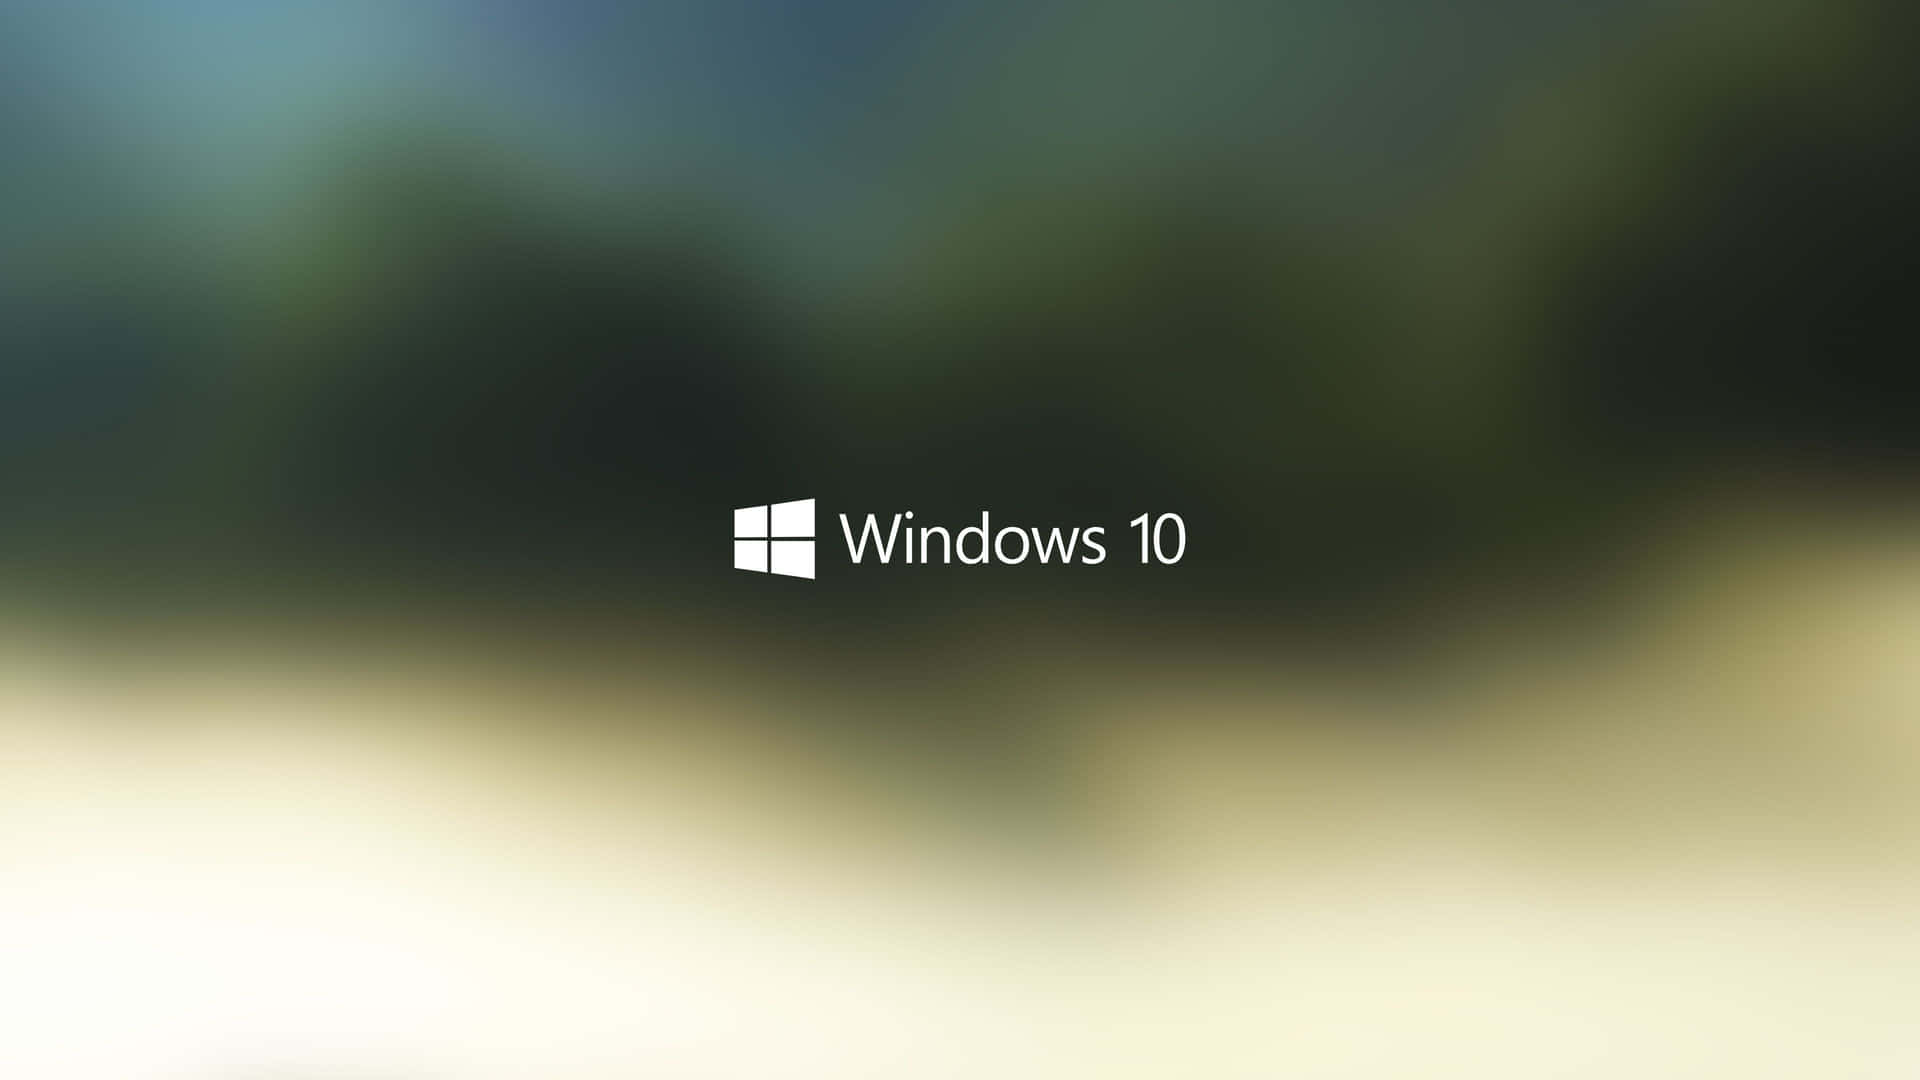 A beautiful Windows 10 desktop background